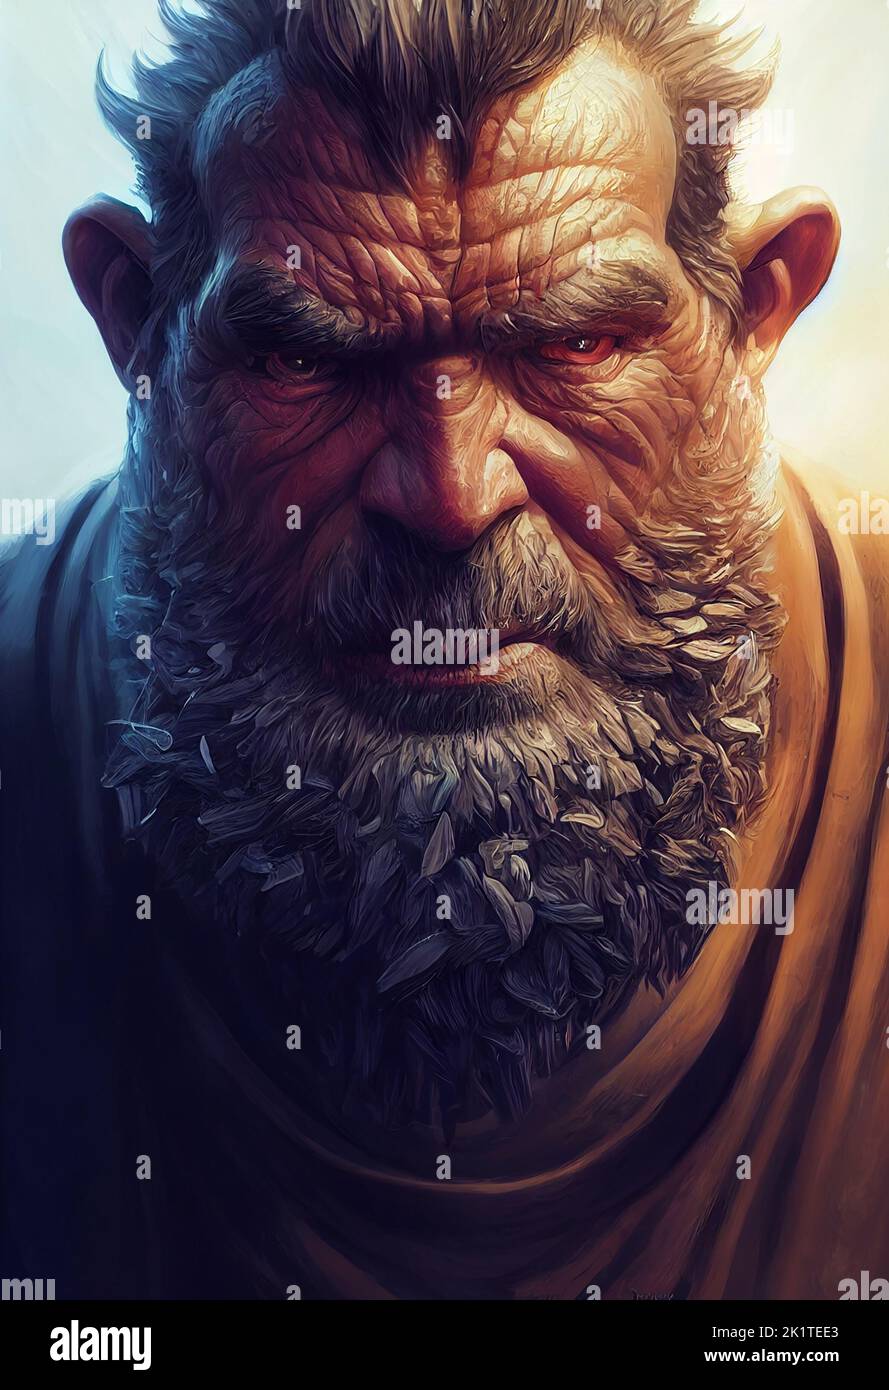 A 3D illustration of an old fantasy god with a tired face and bushy gray beard - fantasy hero digital art Stock Photo